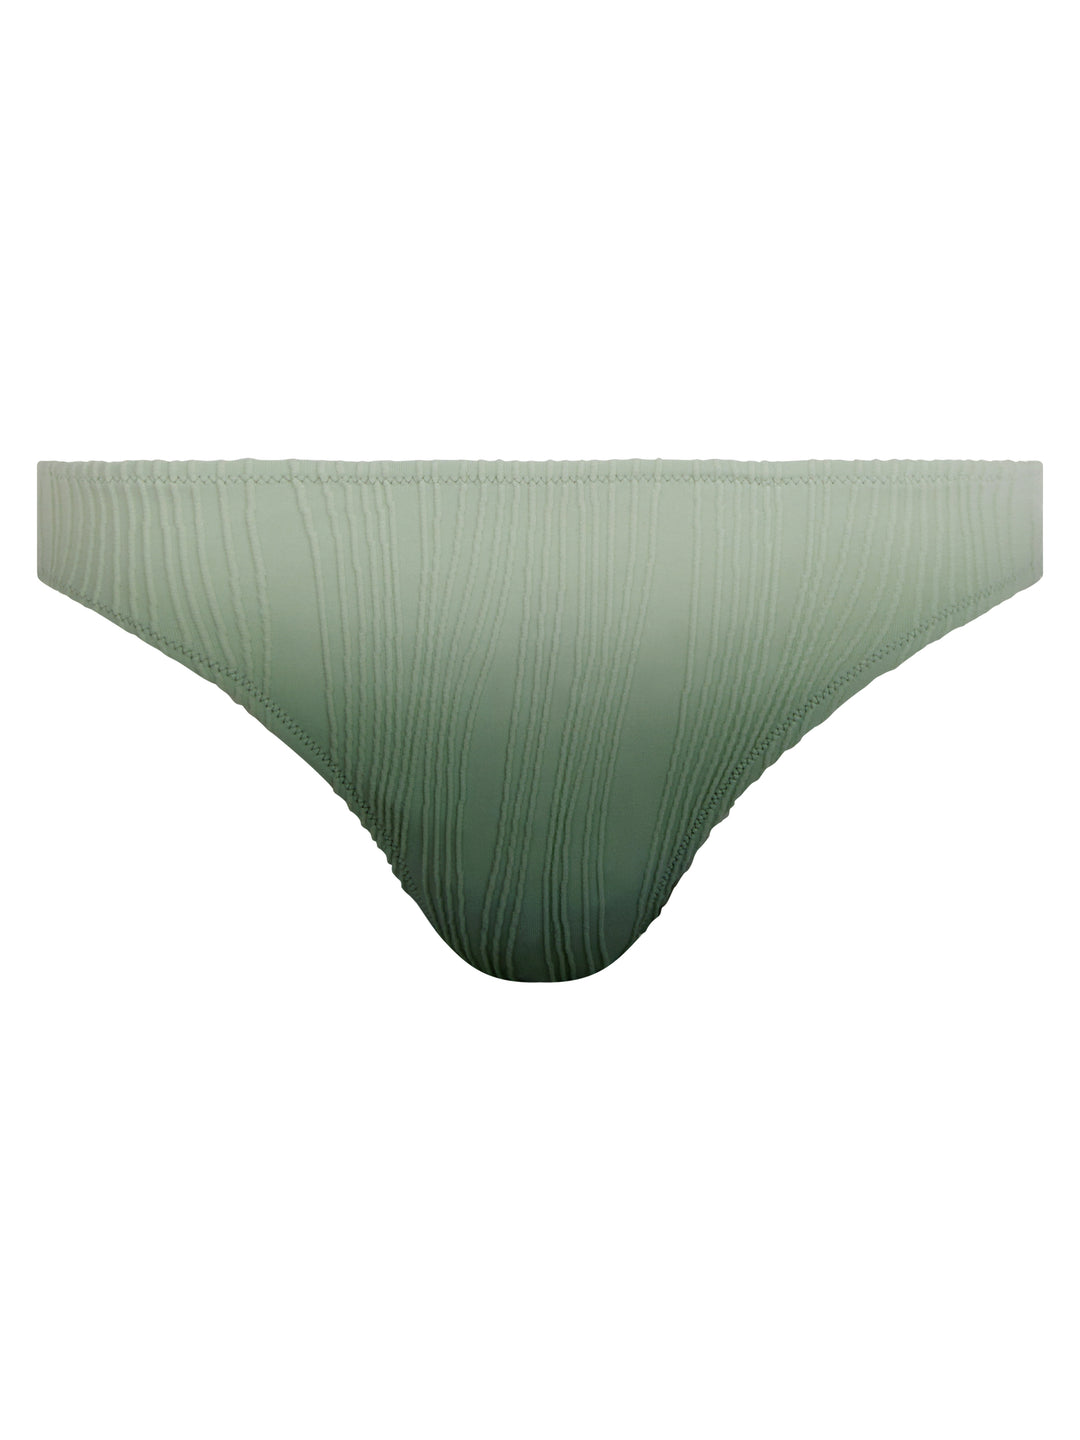 Chantelle Swimwear - Swim One Size Brief Green tie & dye